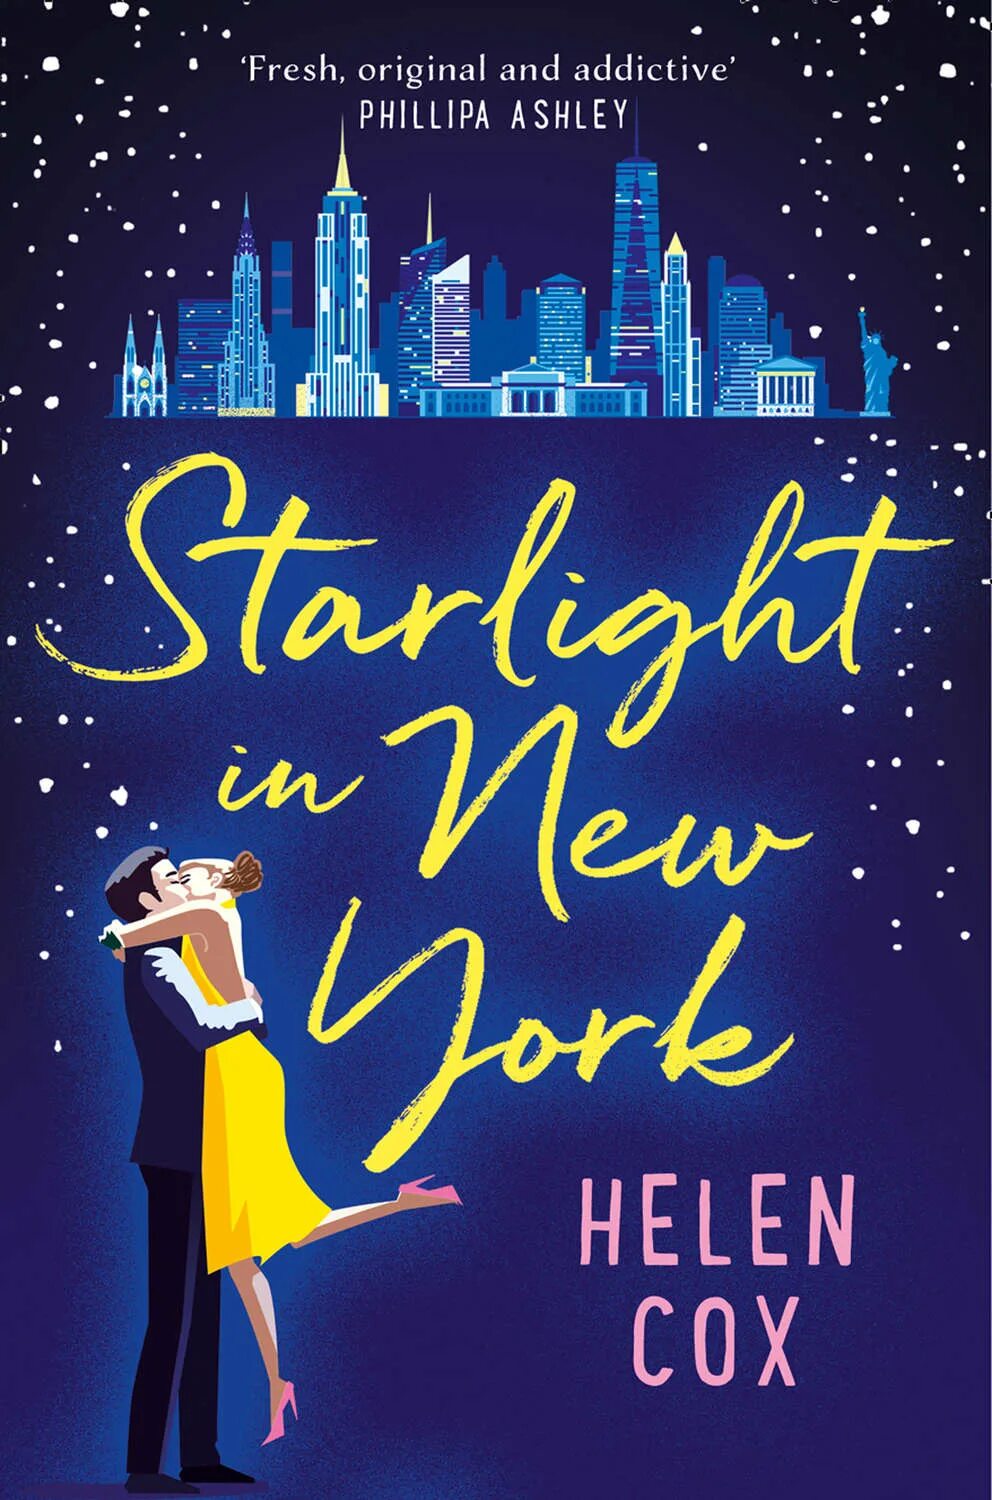 Starlight book. Хелен кокс. Helen Cox.